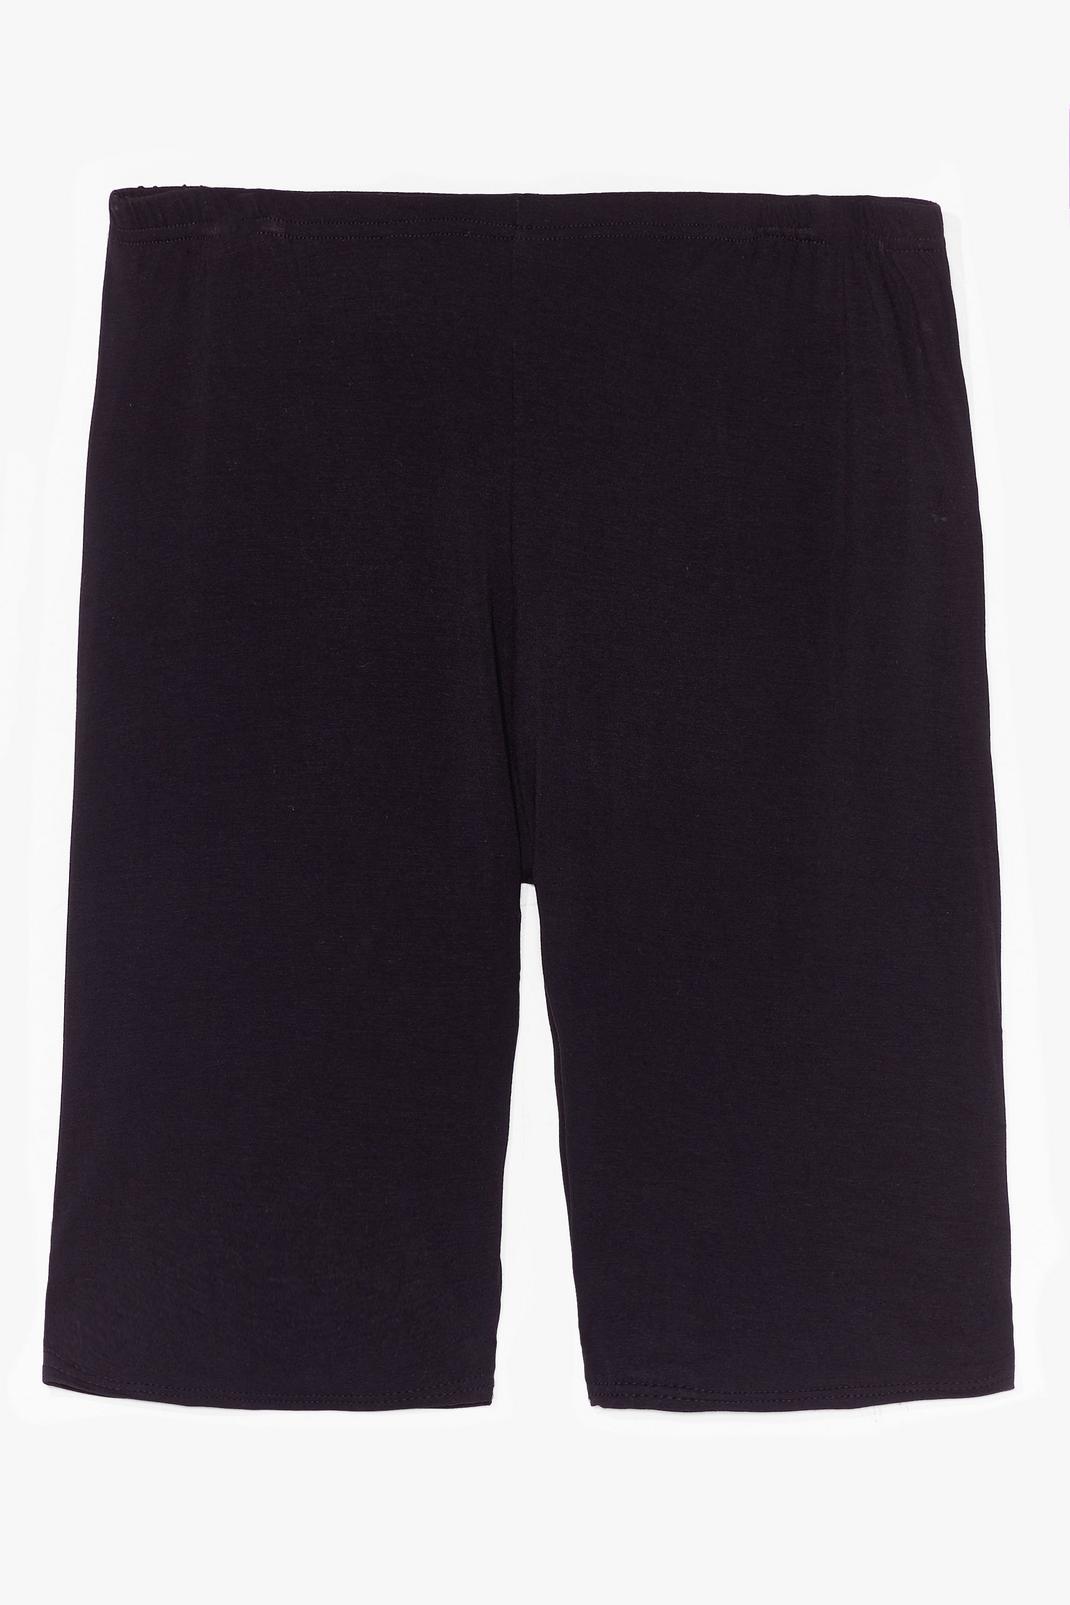 Black Plus Size Stretchy Longline Biker Shorts image number 1